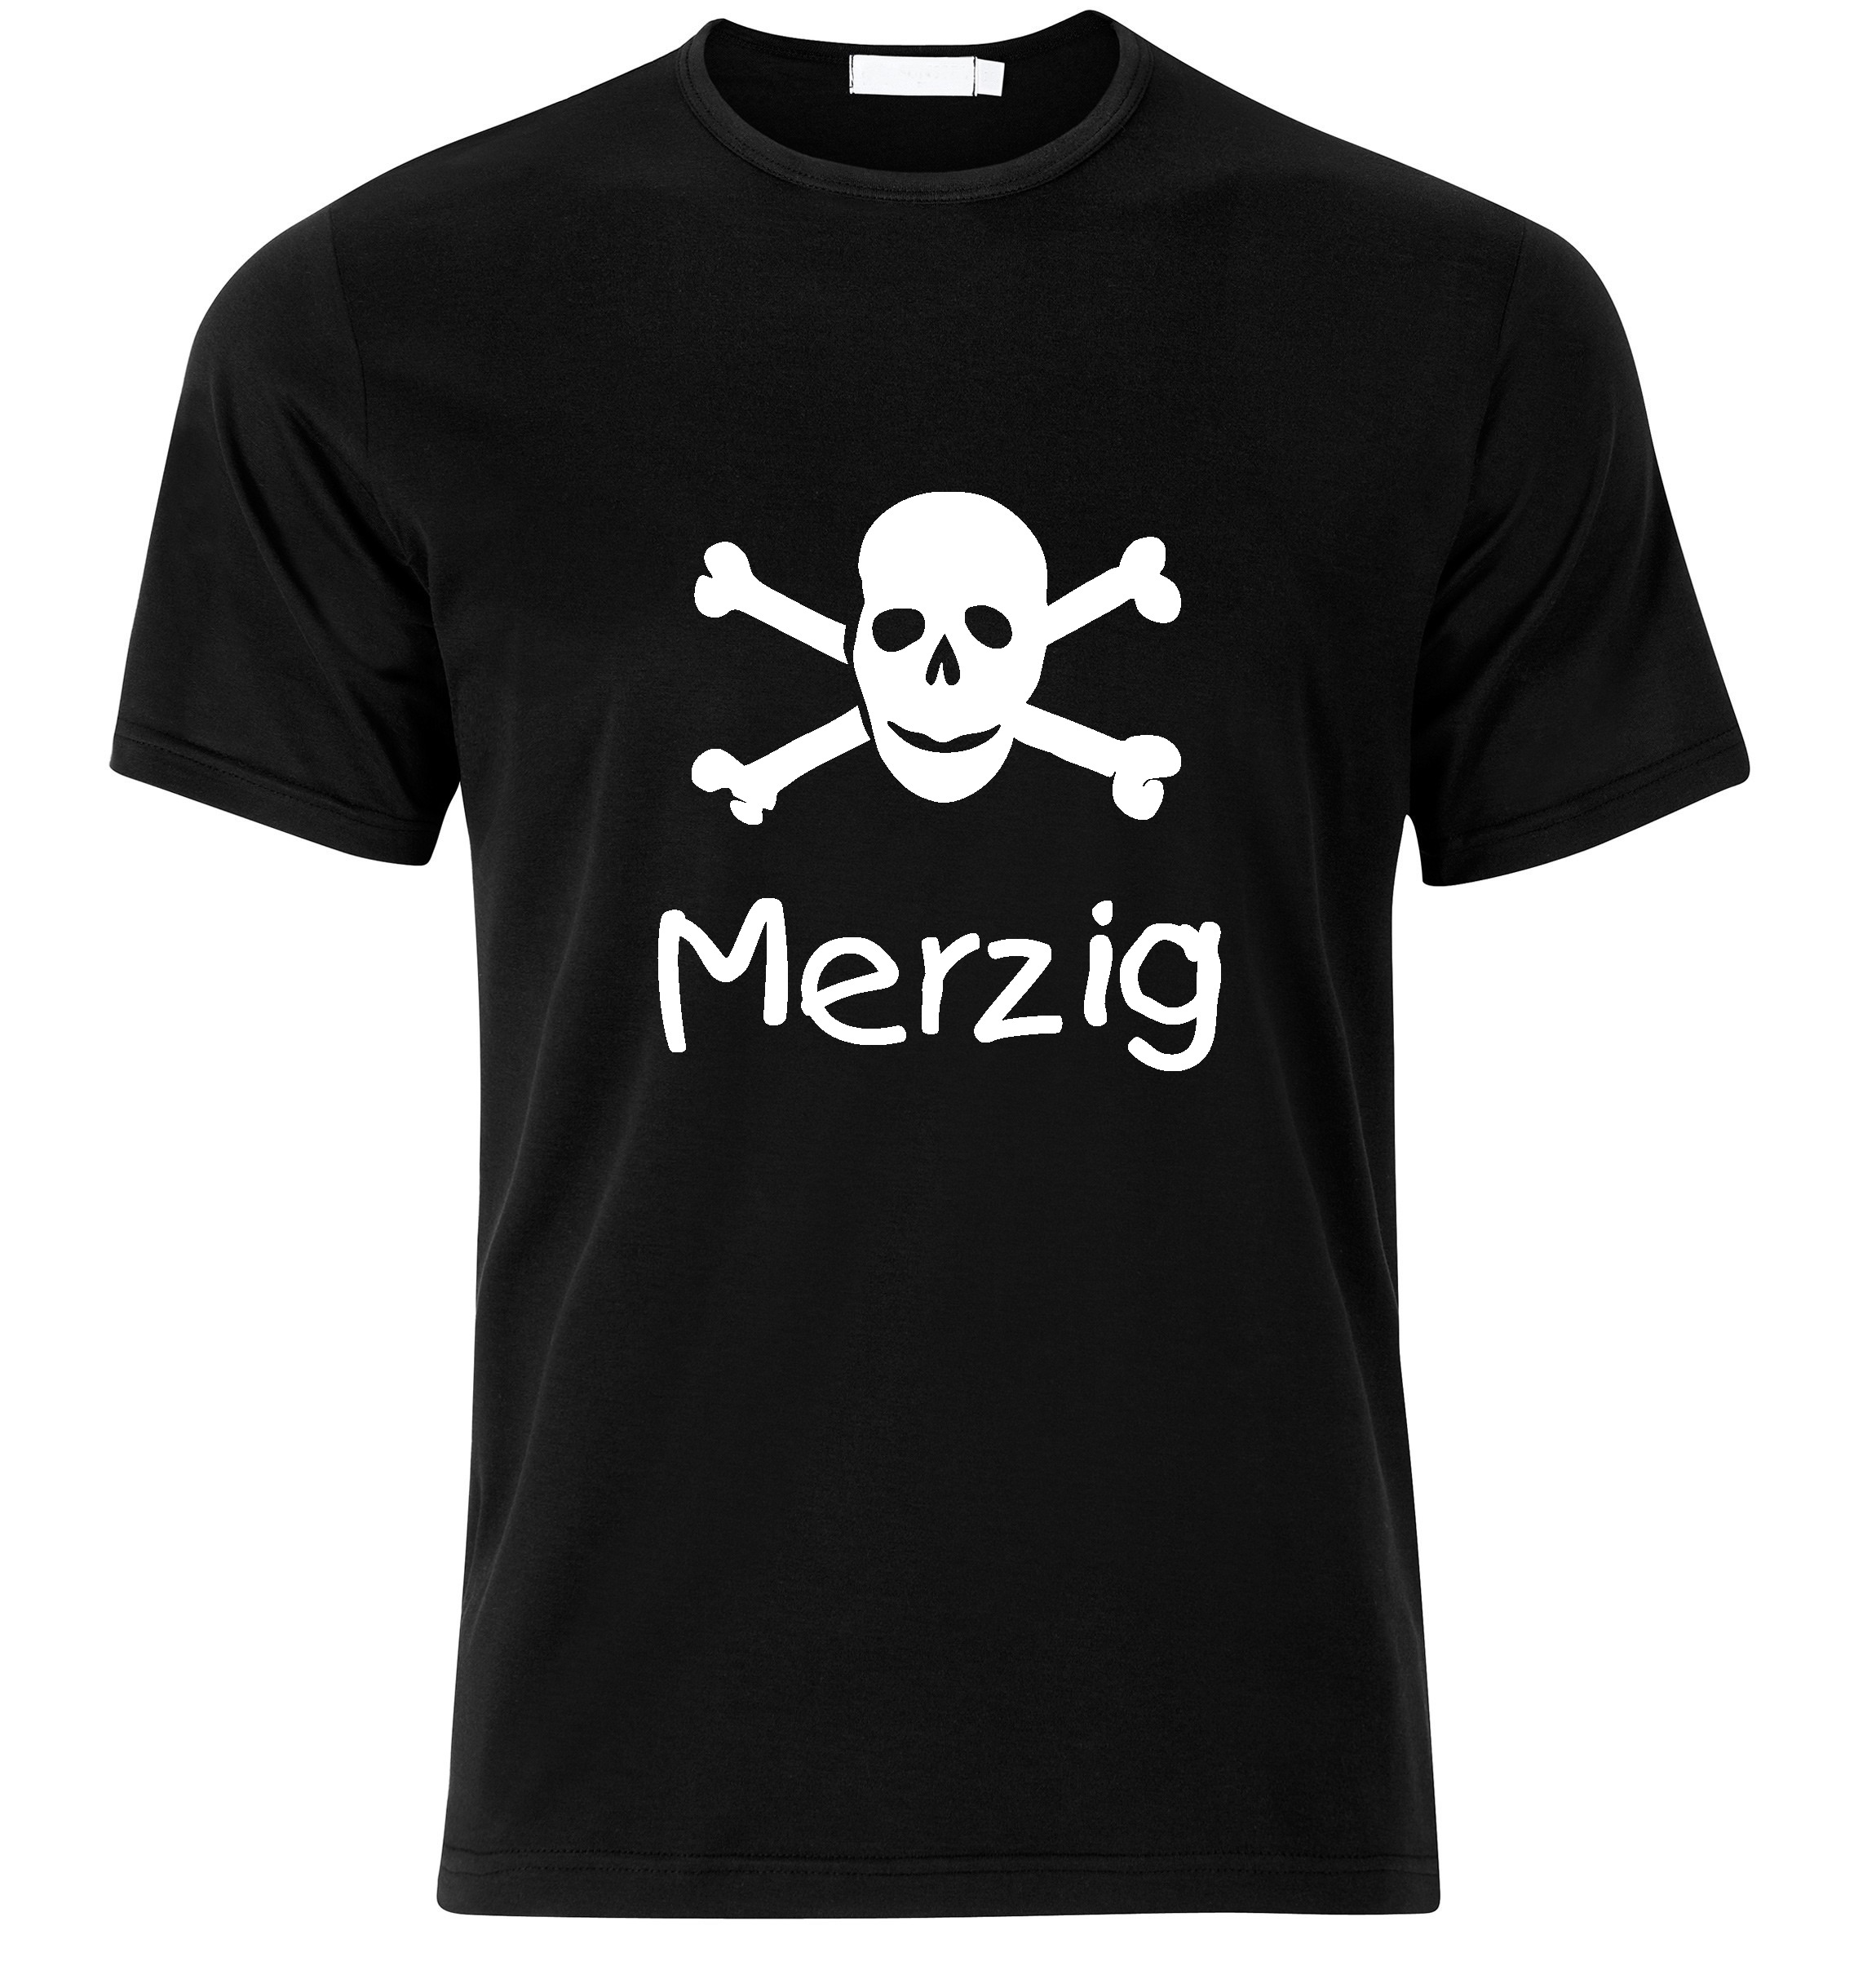 T-Shirt Merzig Jolly Roger, Totenkopf